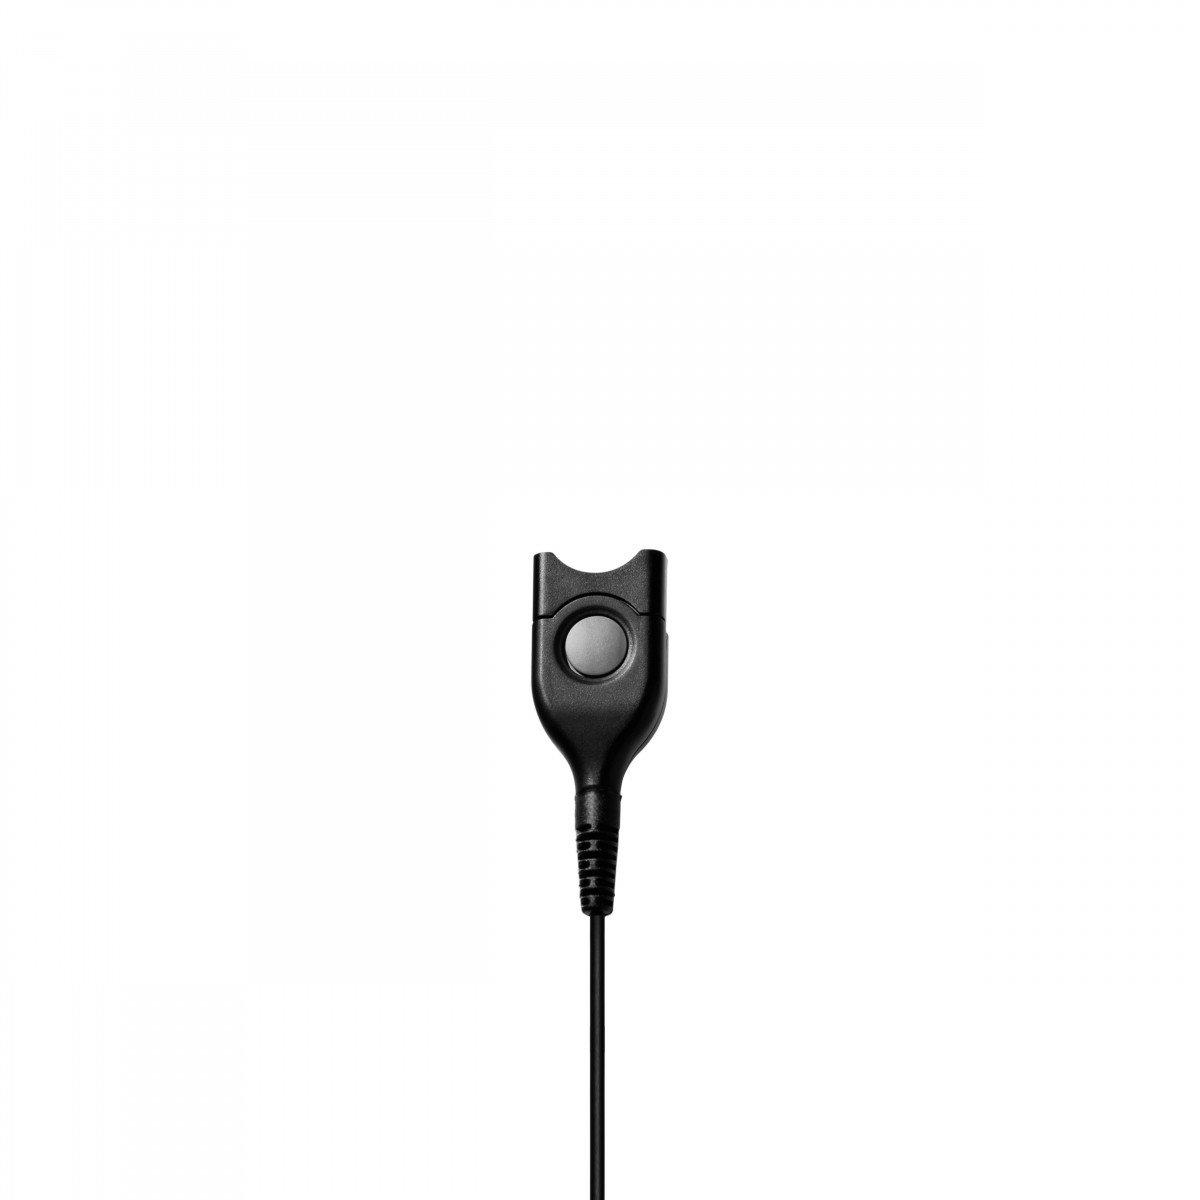 Sennheiser SC 662 Premium-Headset binaural